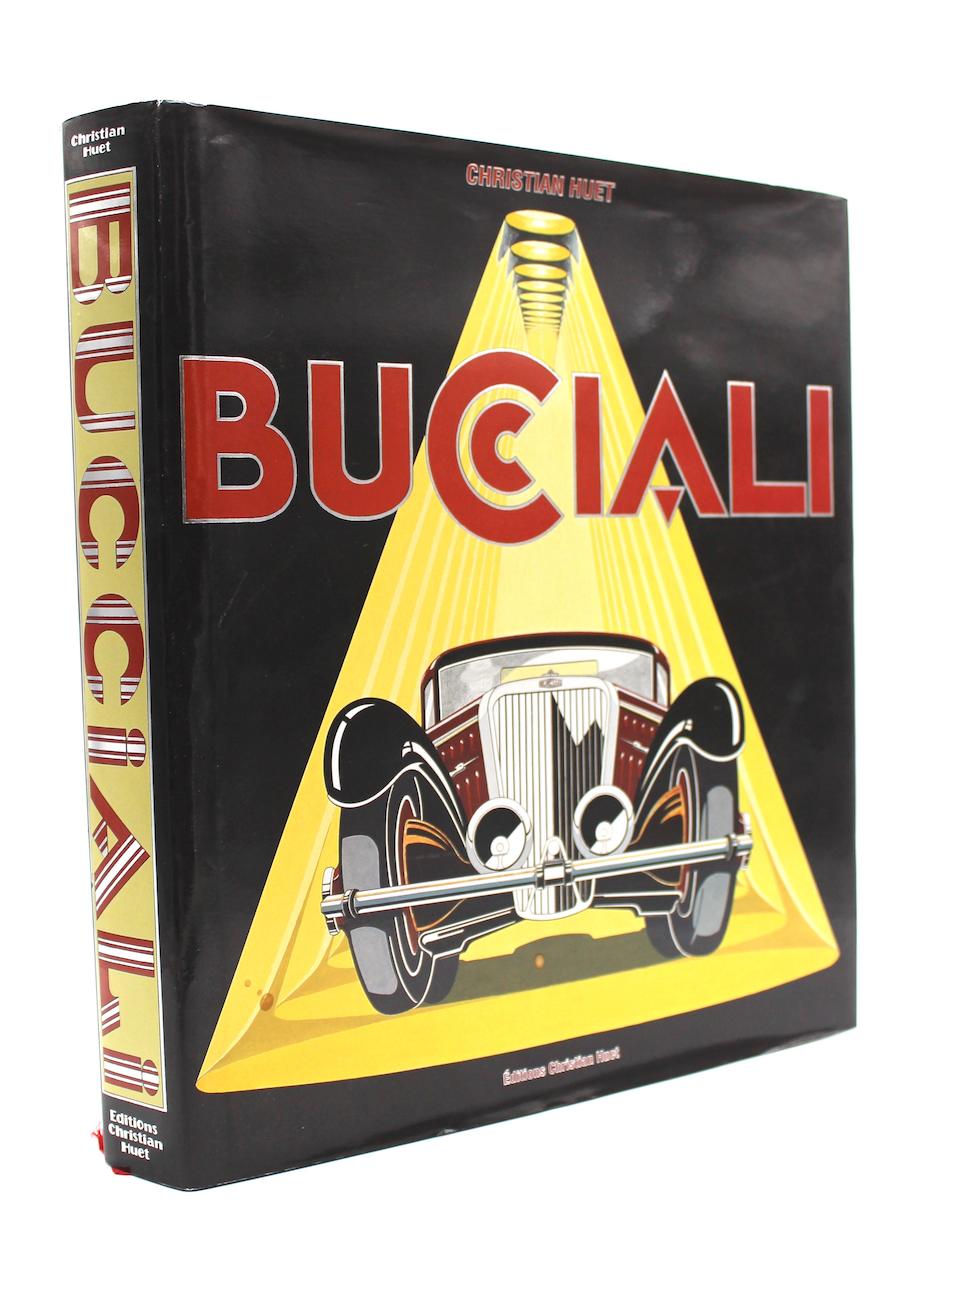 'BUCCIALI' Christian Huet - Image 3 of 4